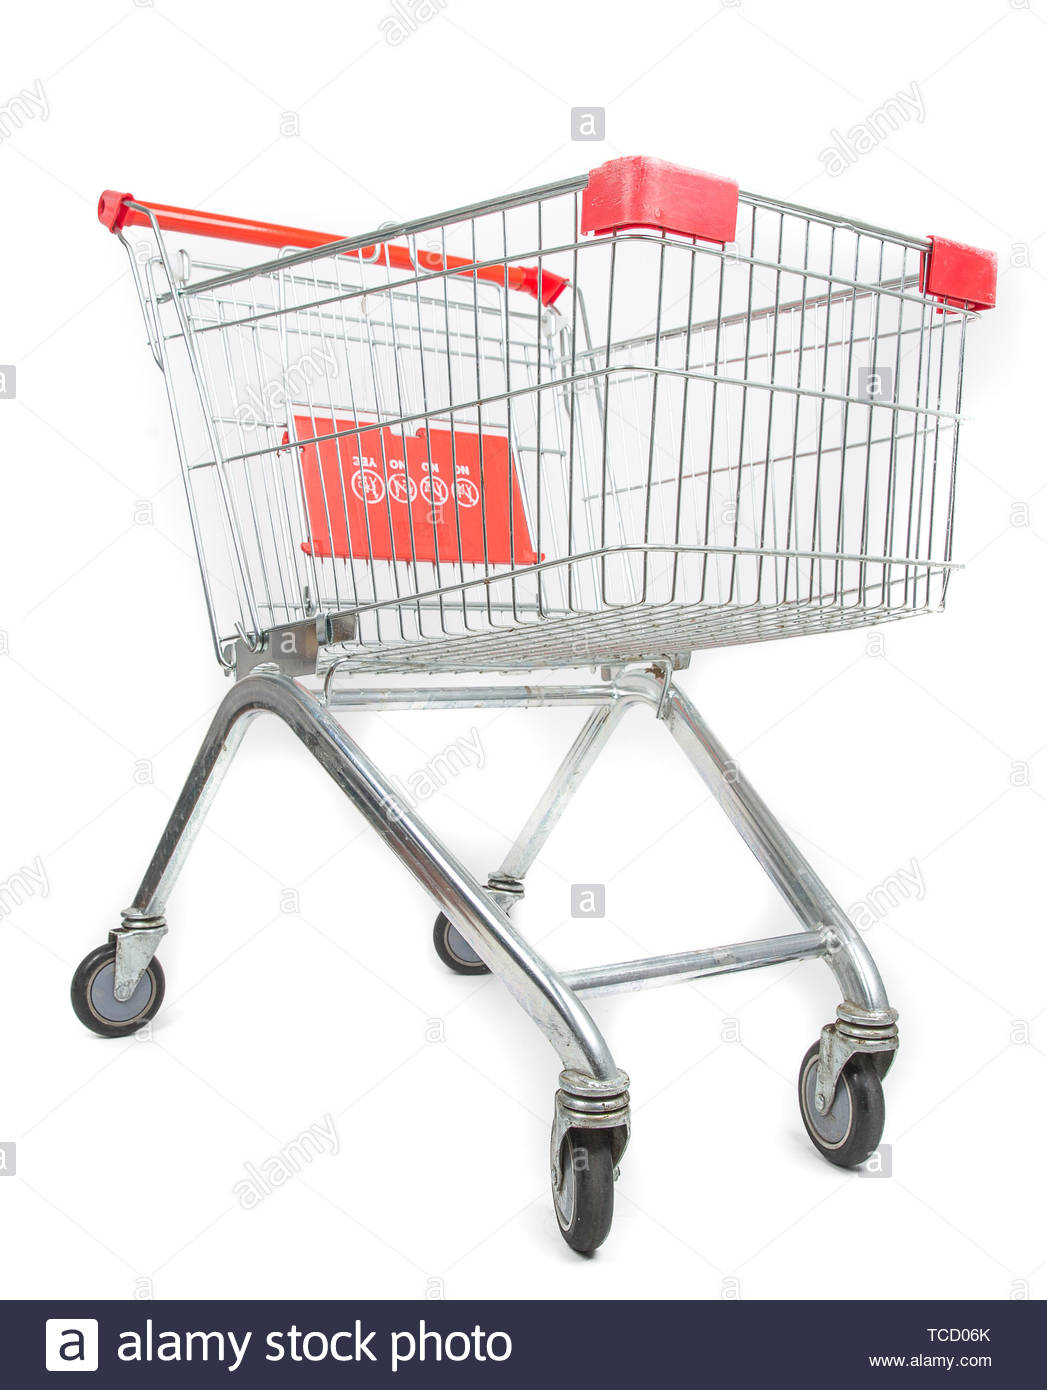 Supermarket Trolley Cart Isolated On White Background Stock Photo